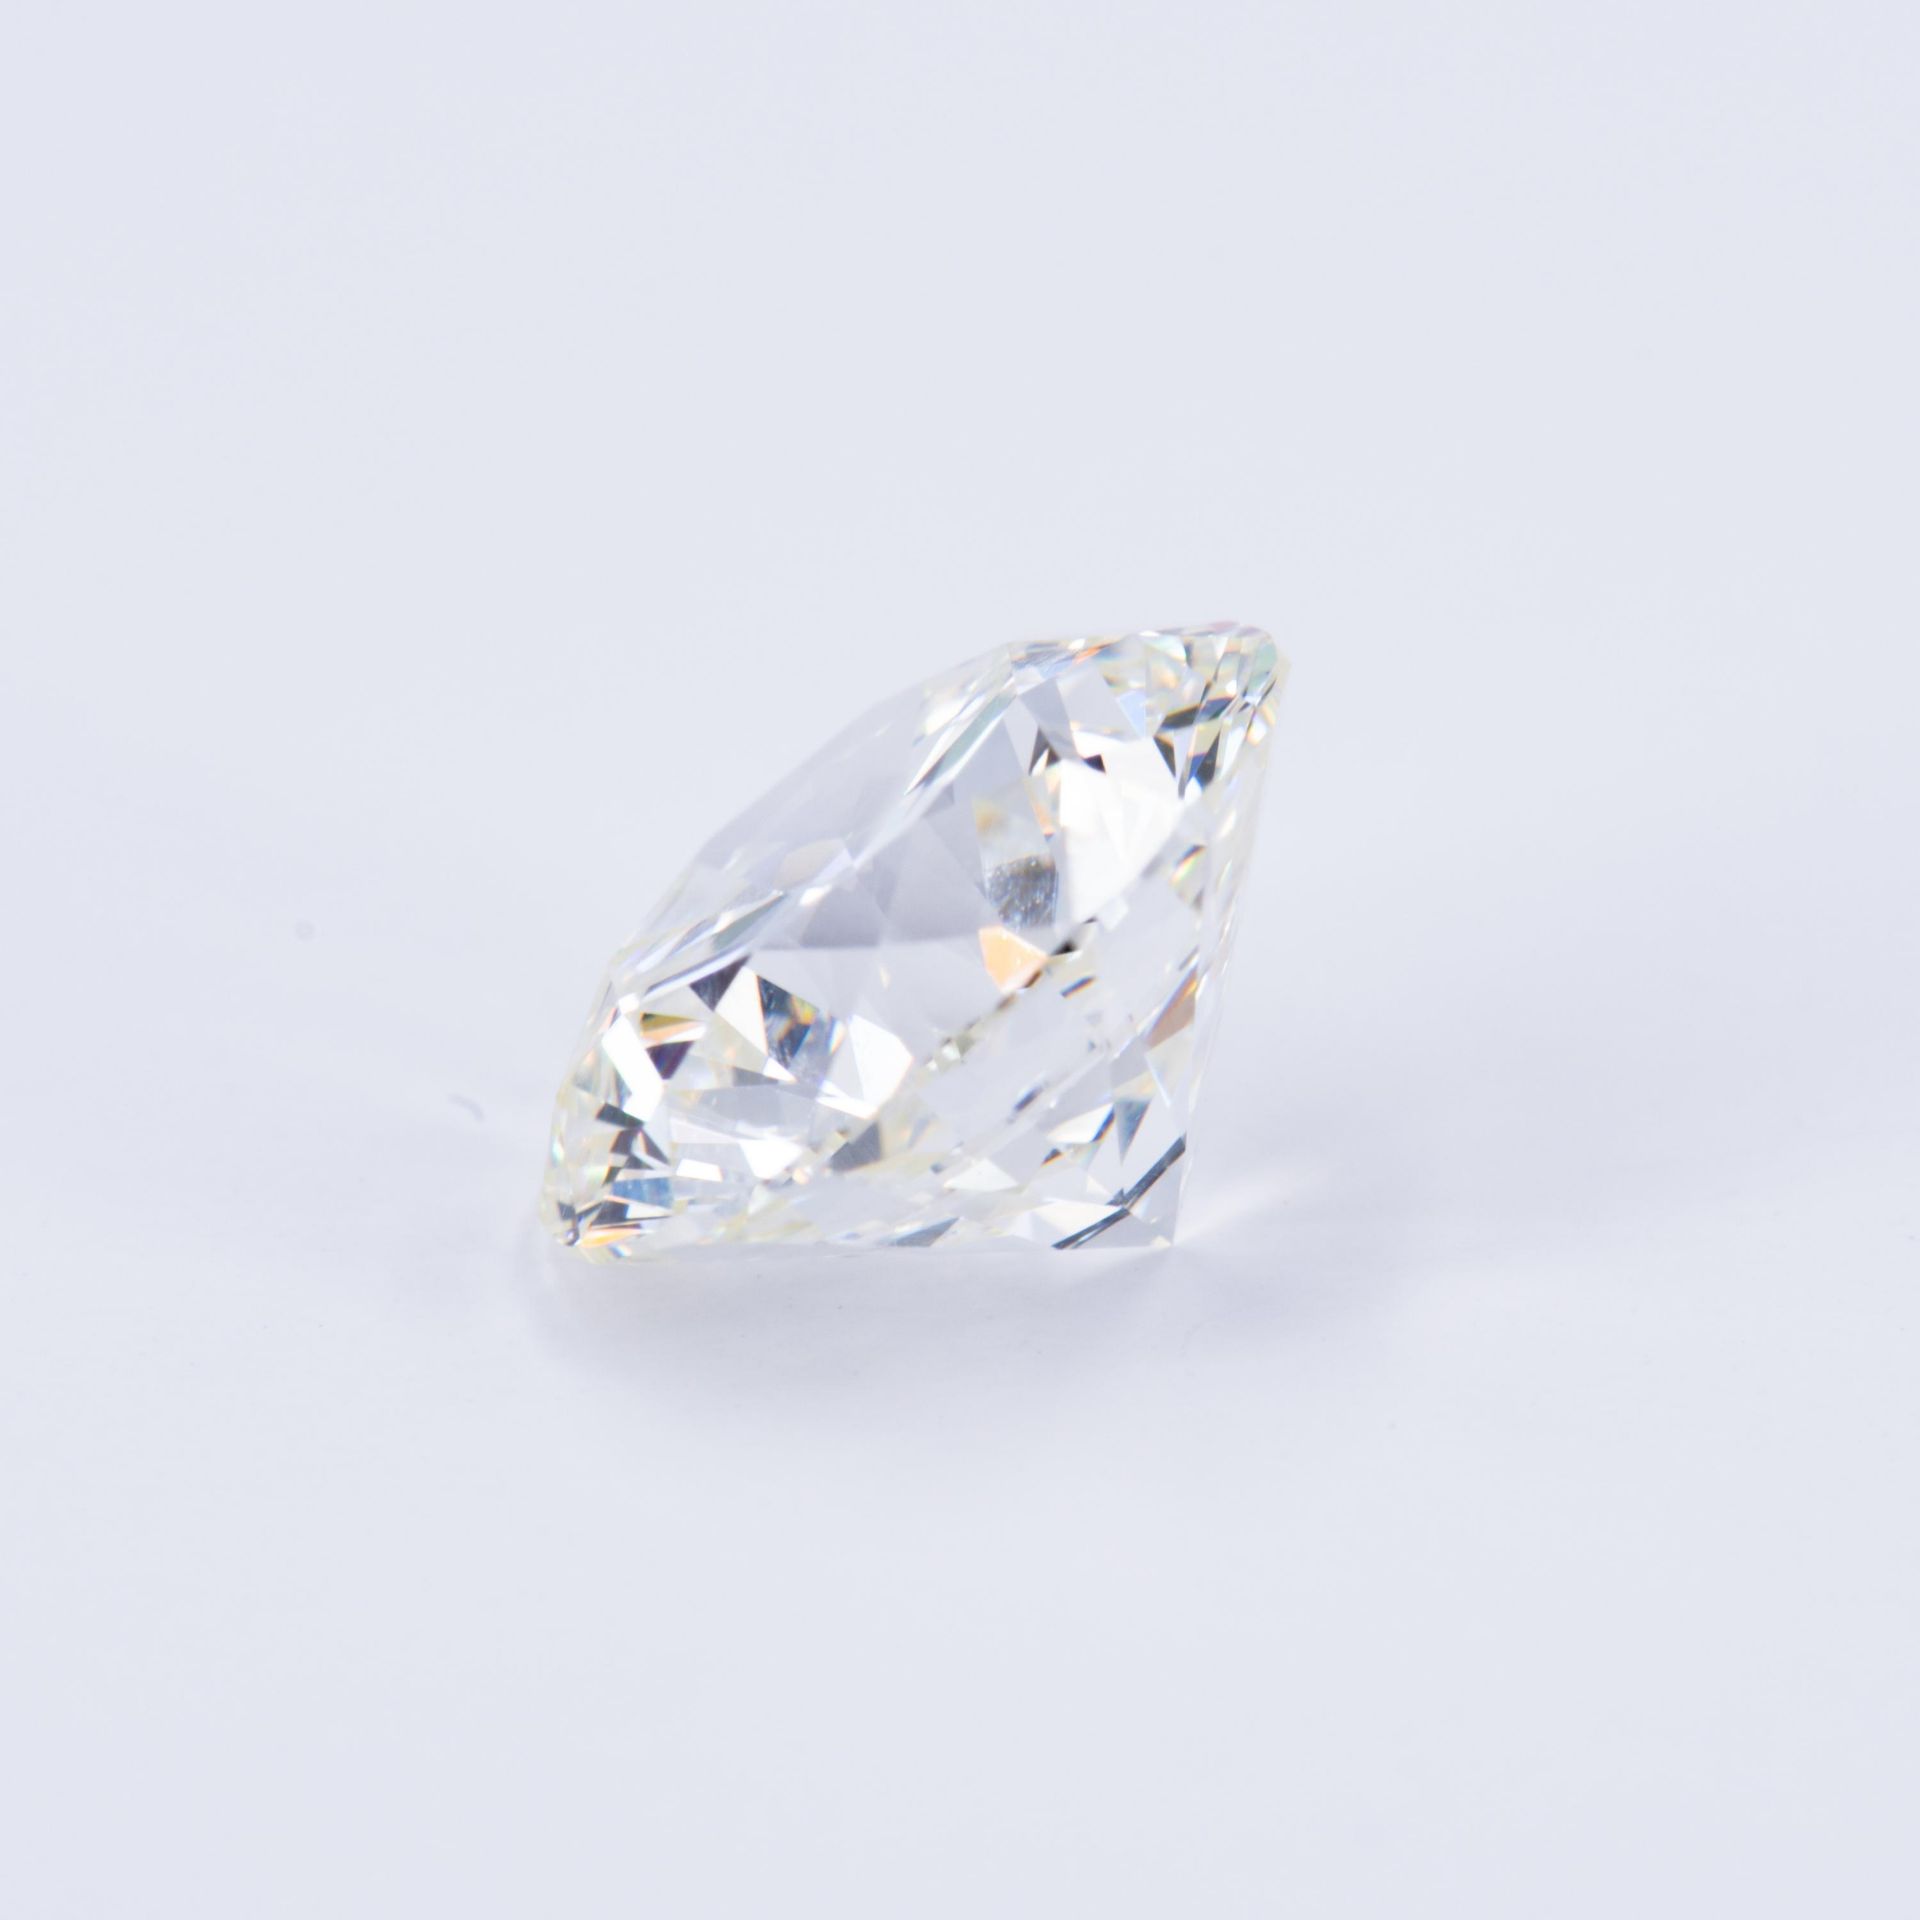 UNMOUNTED BRILLIANT-CUT DIAMOND - Image 2 of 6